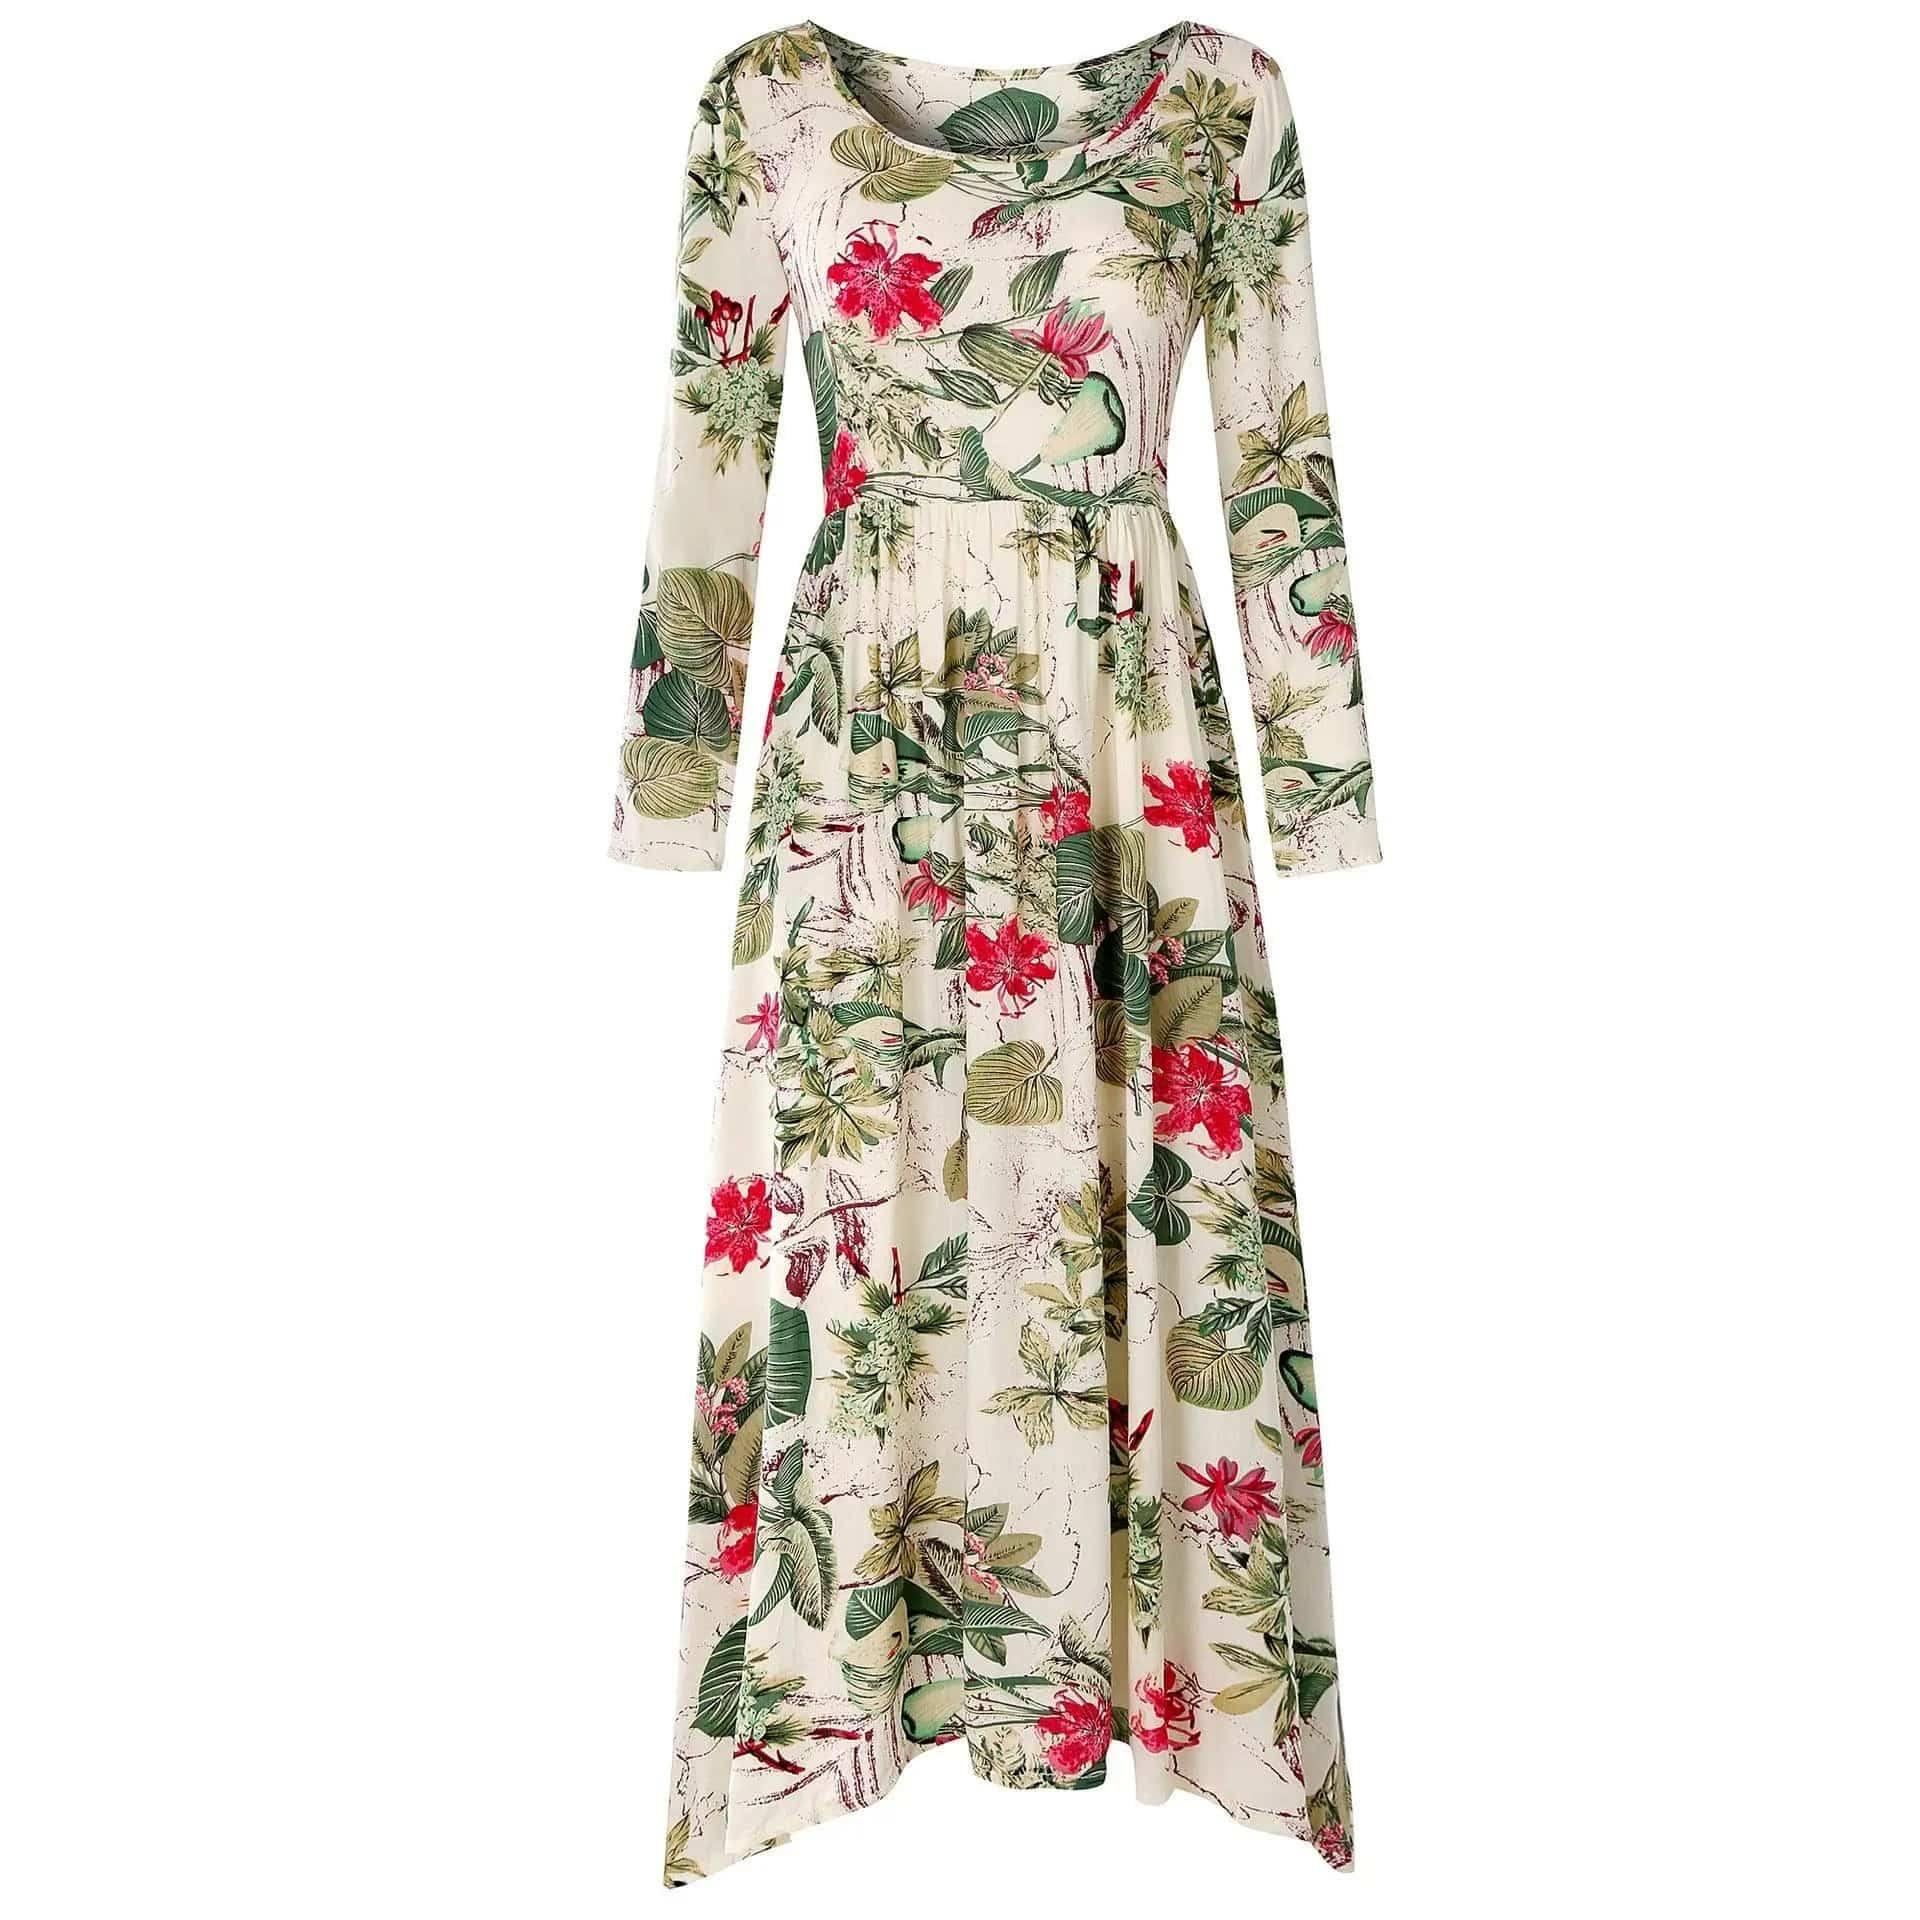 LOVEMI - Vintage Floral Print Long Sleeve Crew Neck Dress